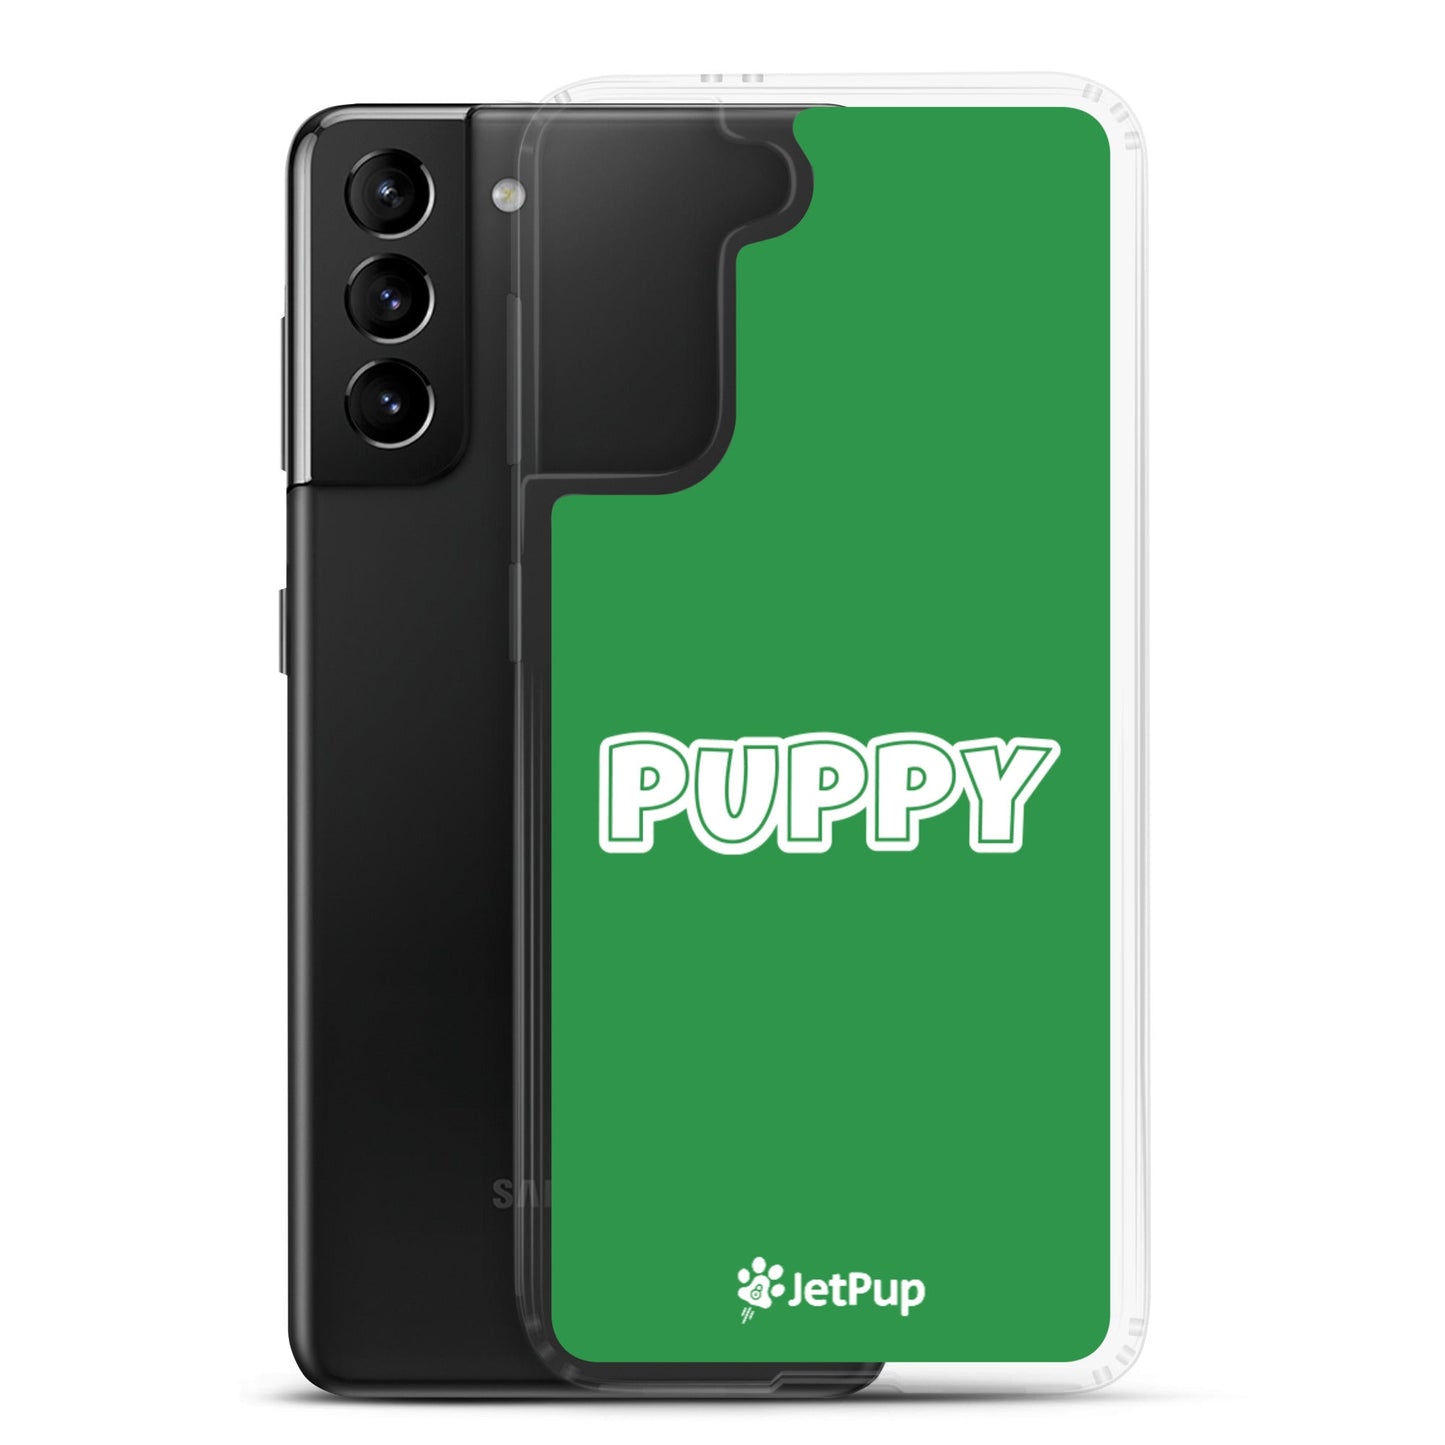 Puppy Samsung Case - Green - JetPup